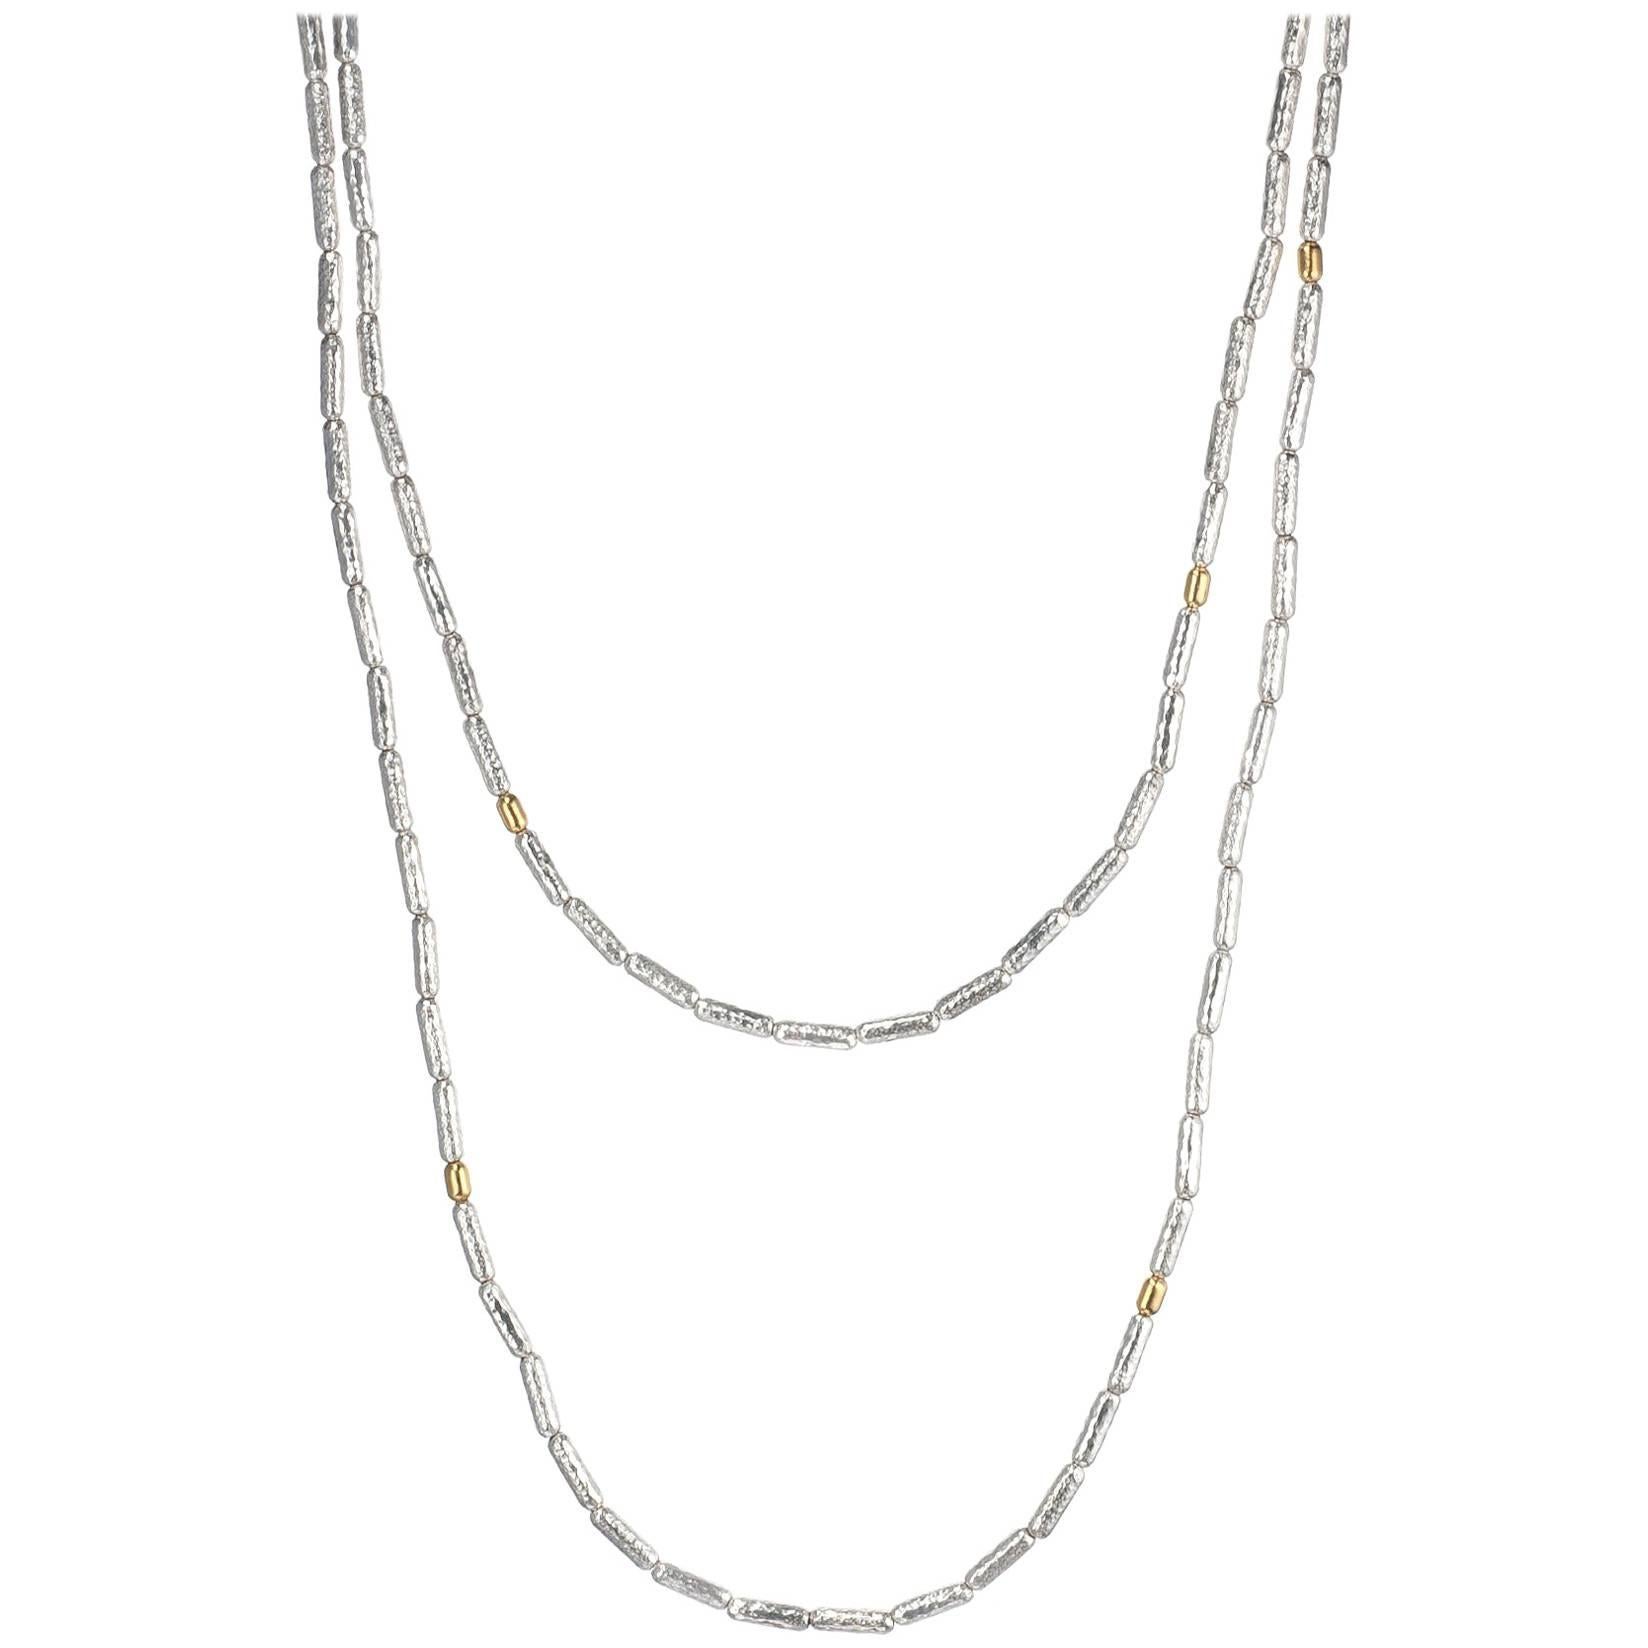 Gurhan “Vertigo” Bead Necklace in 24 Karat Yellow Gold and Sterling Silver For Sale